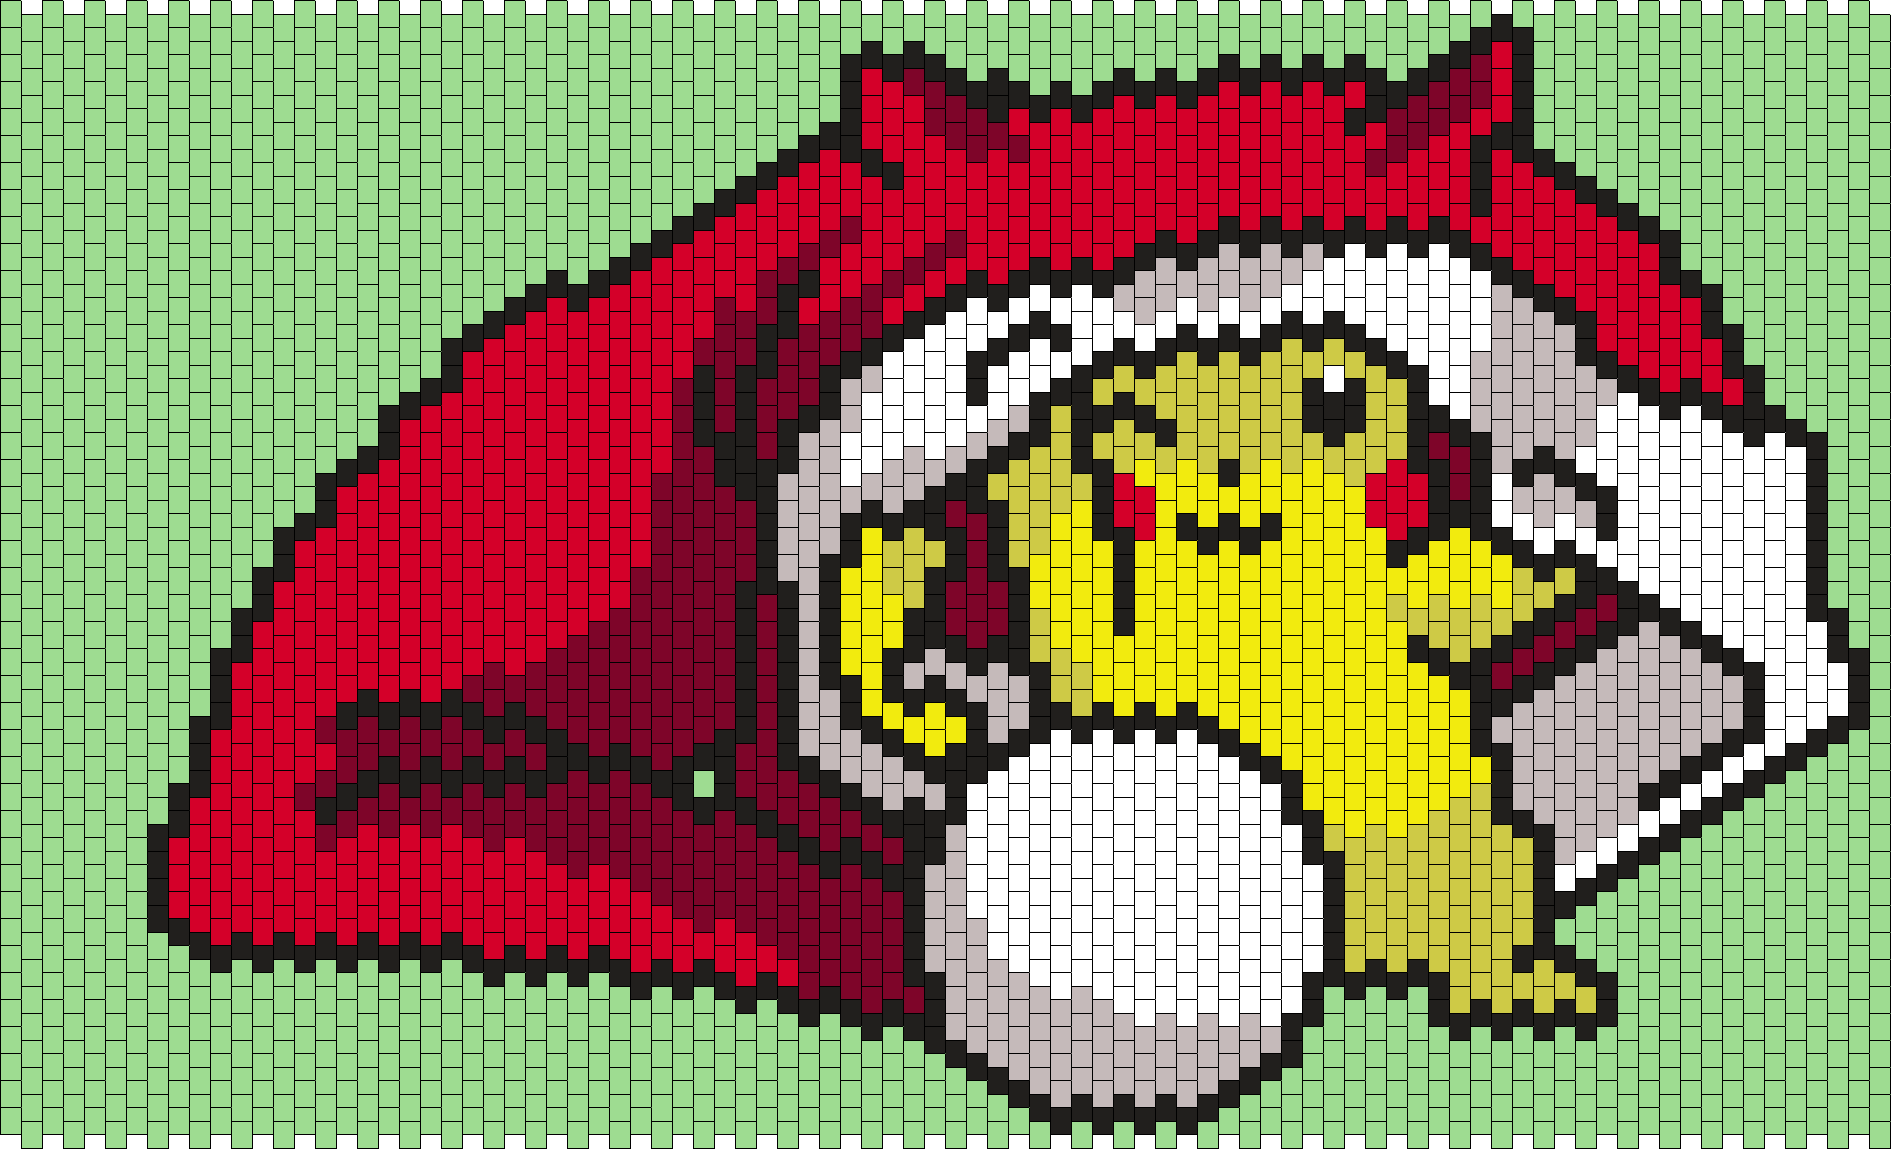 Christmas Pikachu From Pokemon